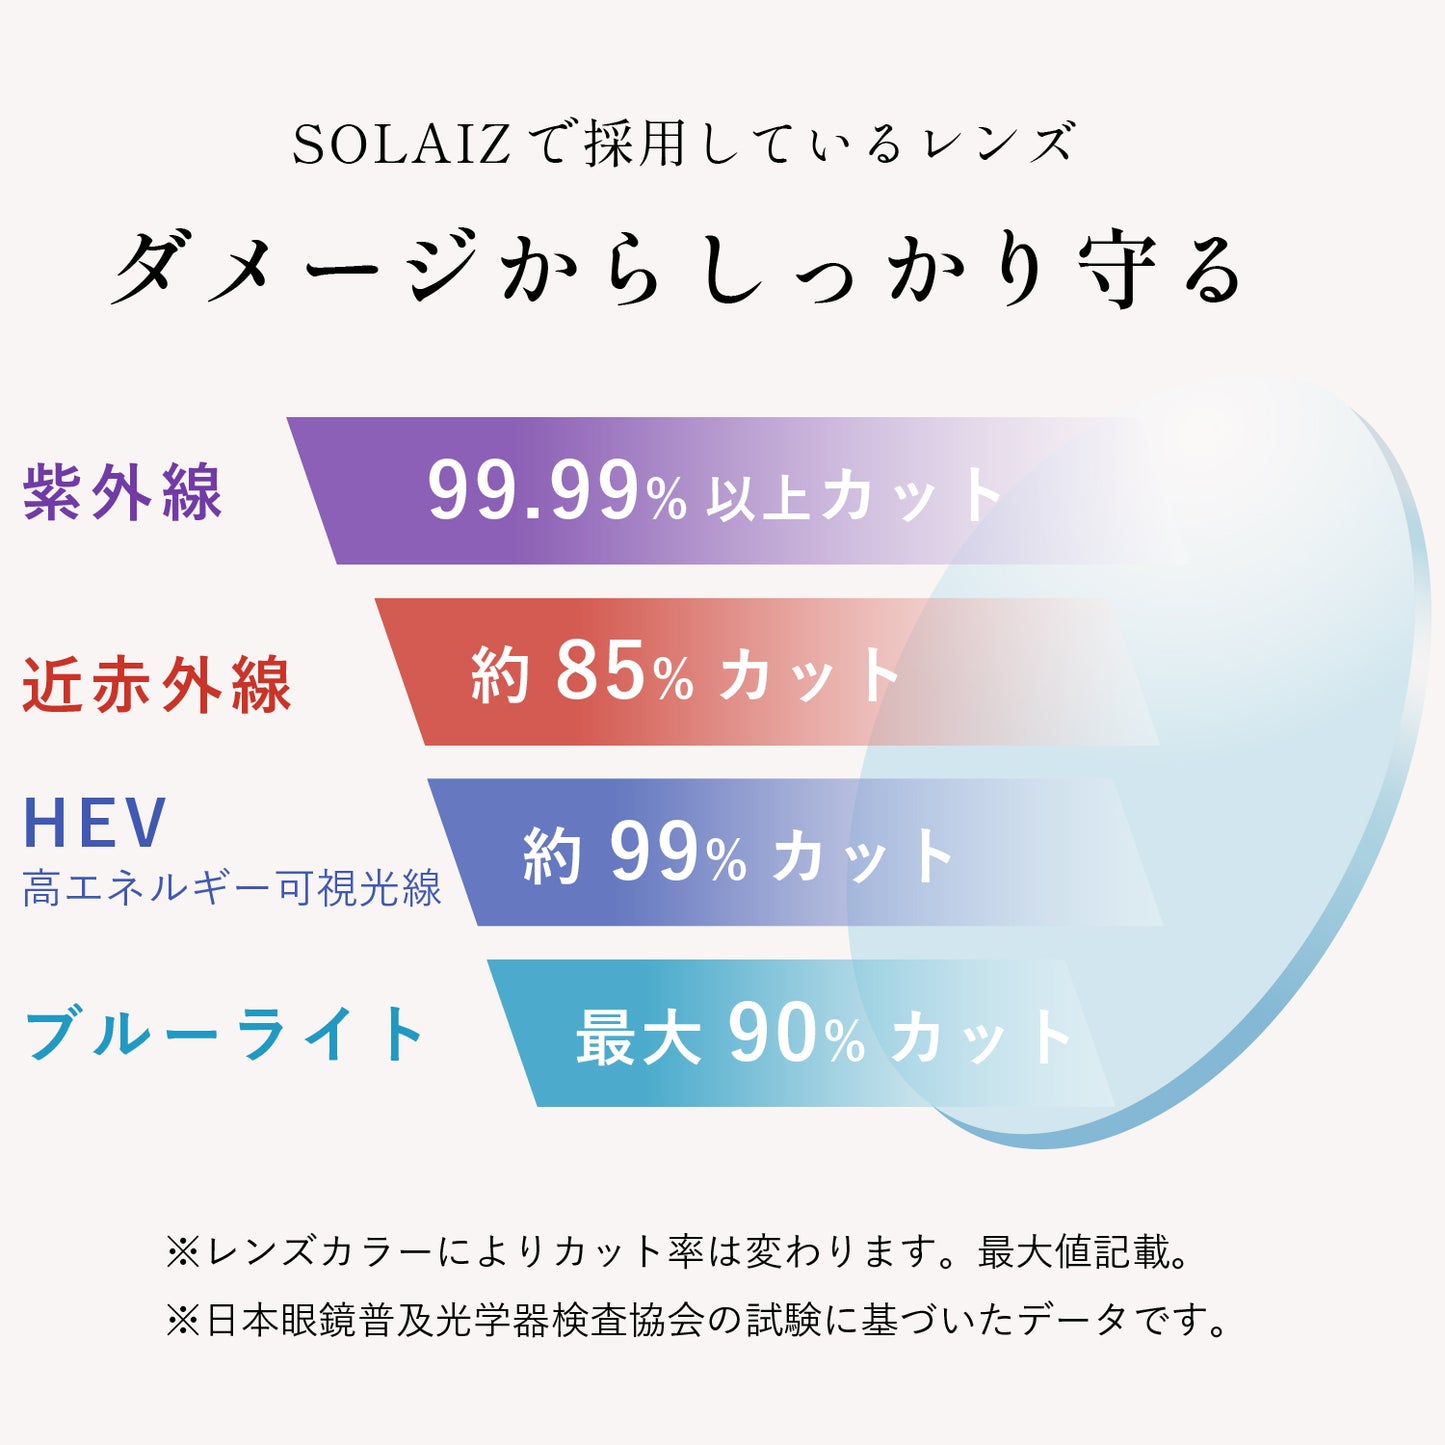 SOLAIZ(ソライズ) SLD-003 OUTDOOR